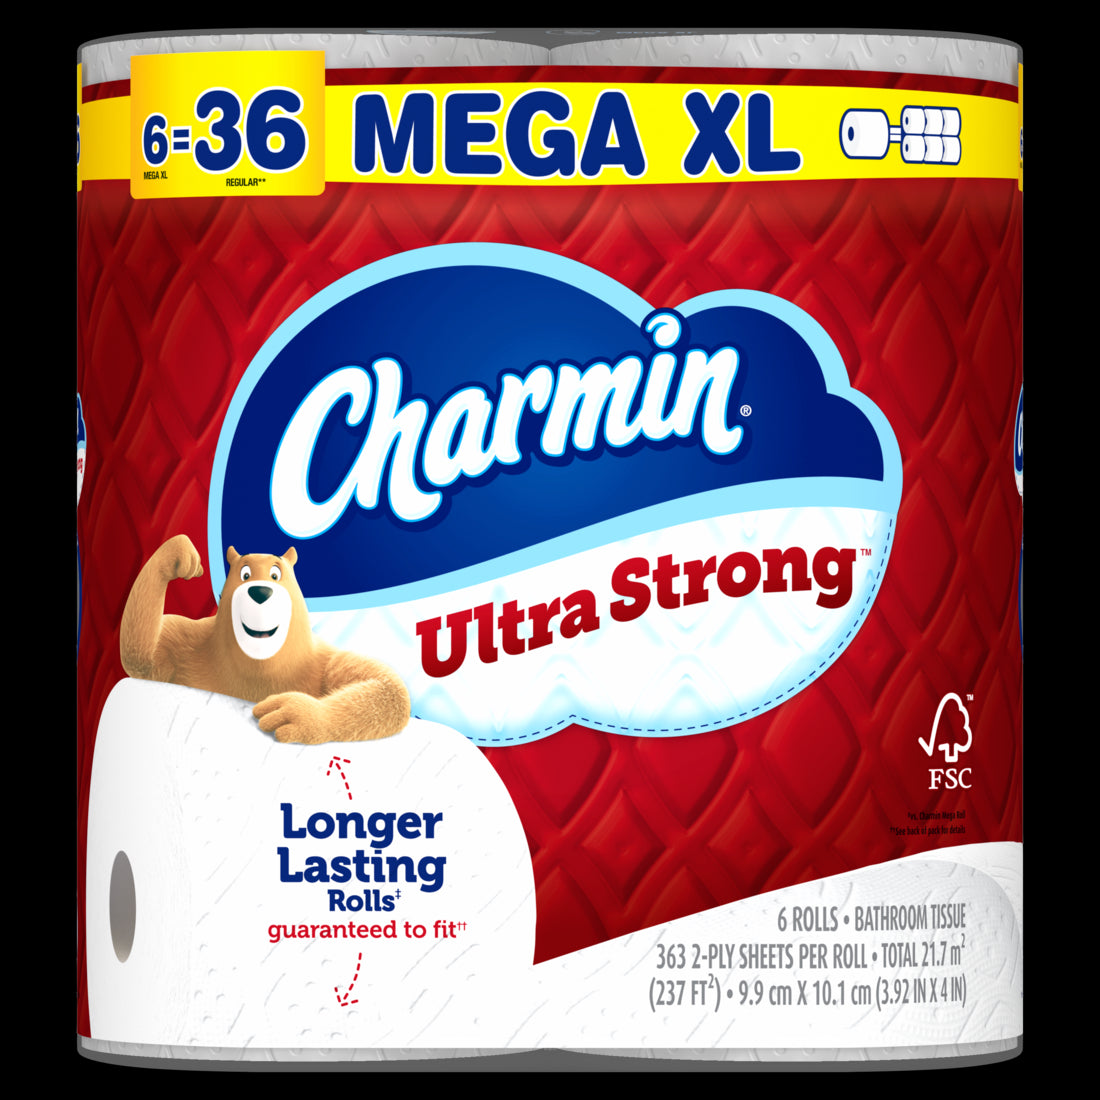 Charmin Ultra Strong Toilet Paper 6 Mega XL Rolls 363 Sheets Per Roll - 6ct/1pk